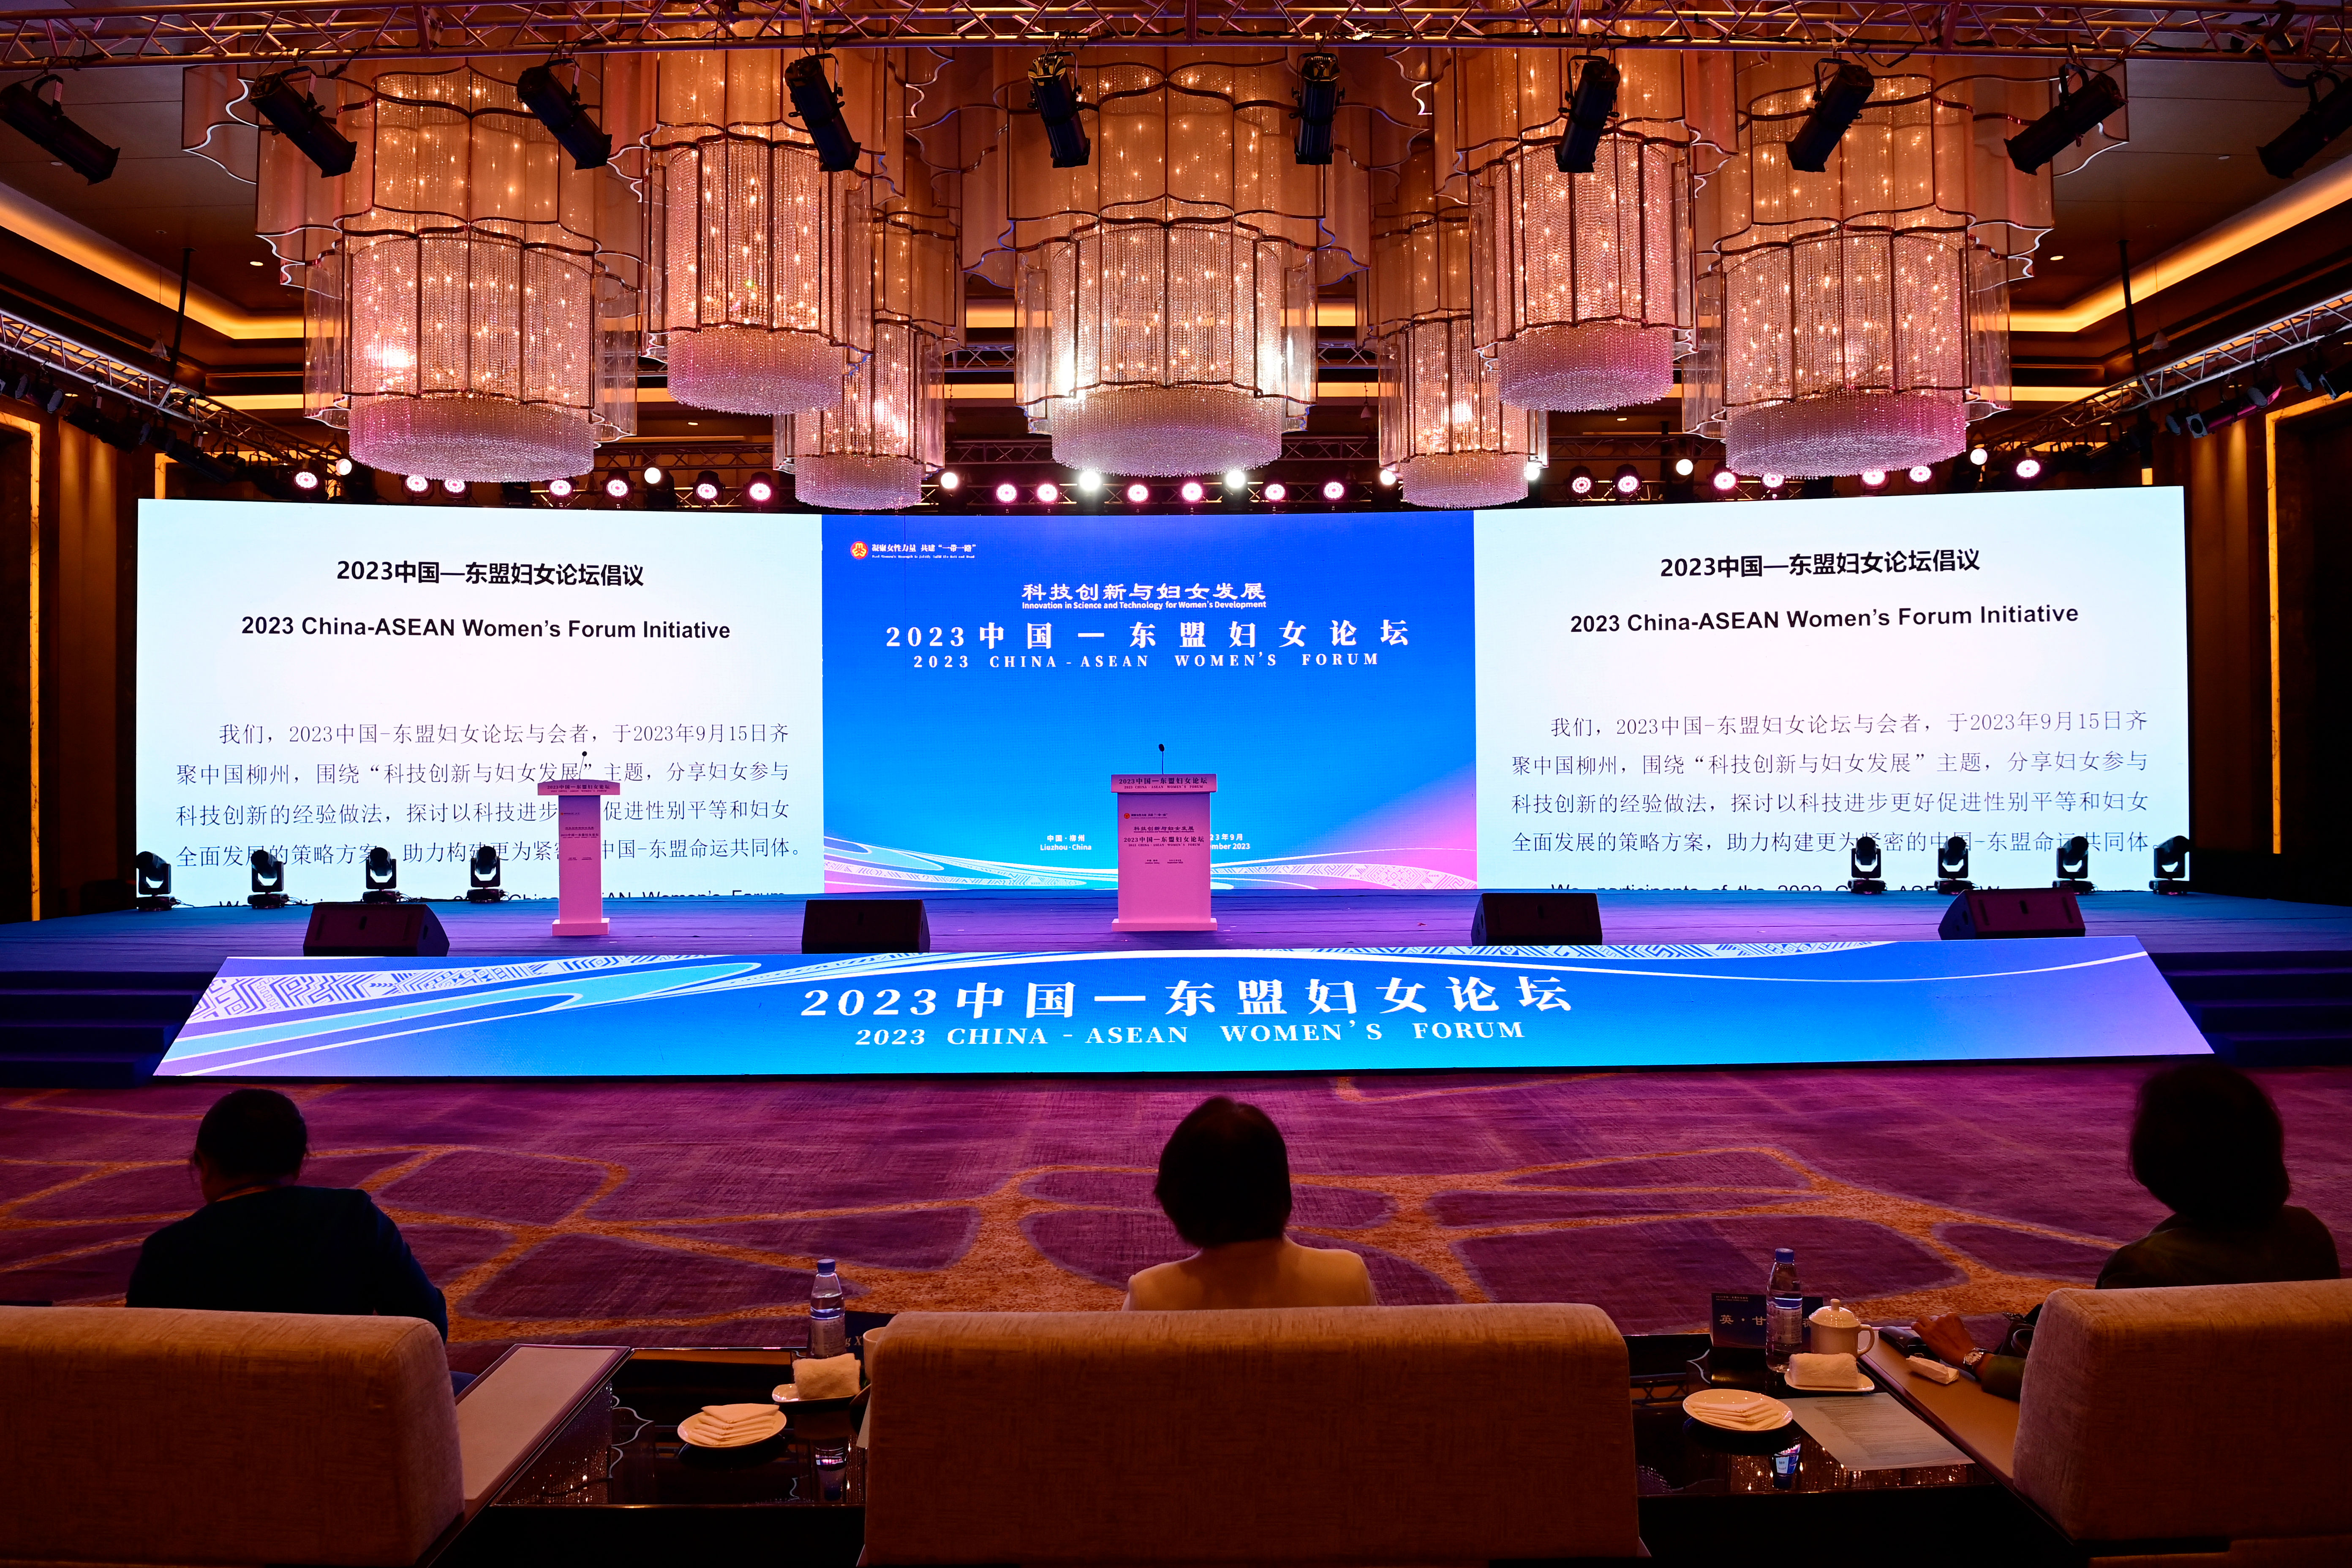 2023 China-ASEAN Women's Forum Held in Liuzhou